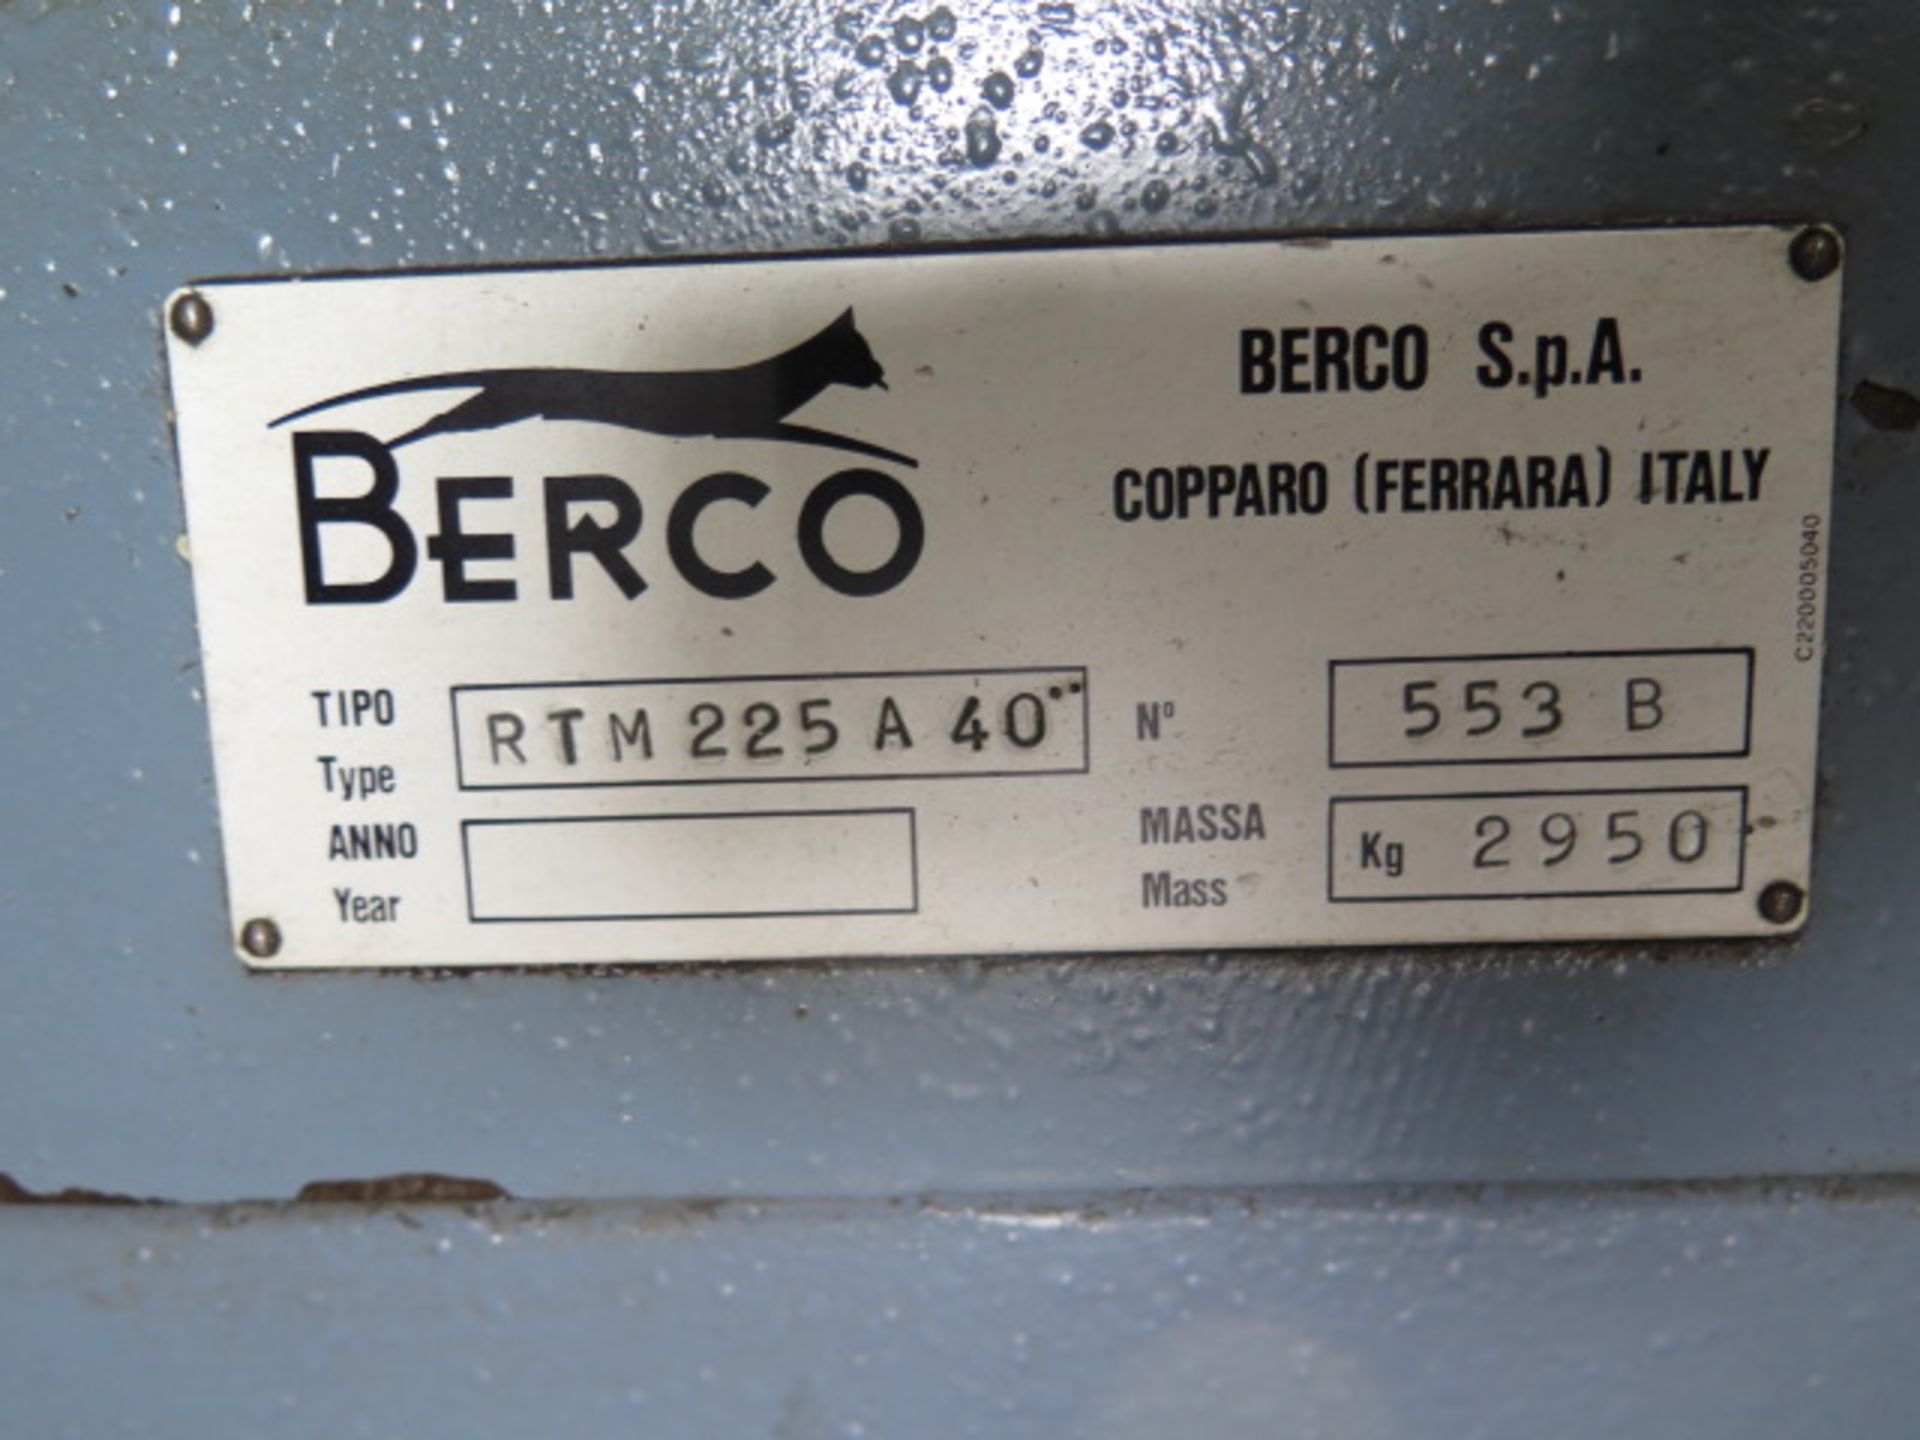 Berco RTM 225A40 Crank Shaft Grinder s/n 553B, DRO, Motorized Work Head, 17 ½” x 36” Cap, SOLD AS IS - Image 17 of 17